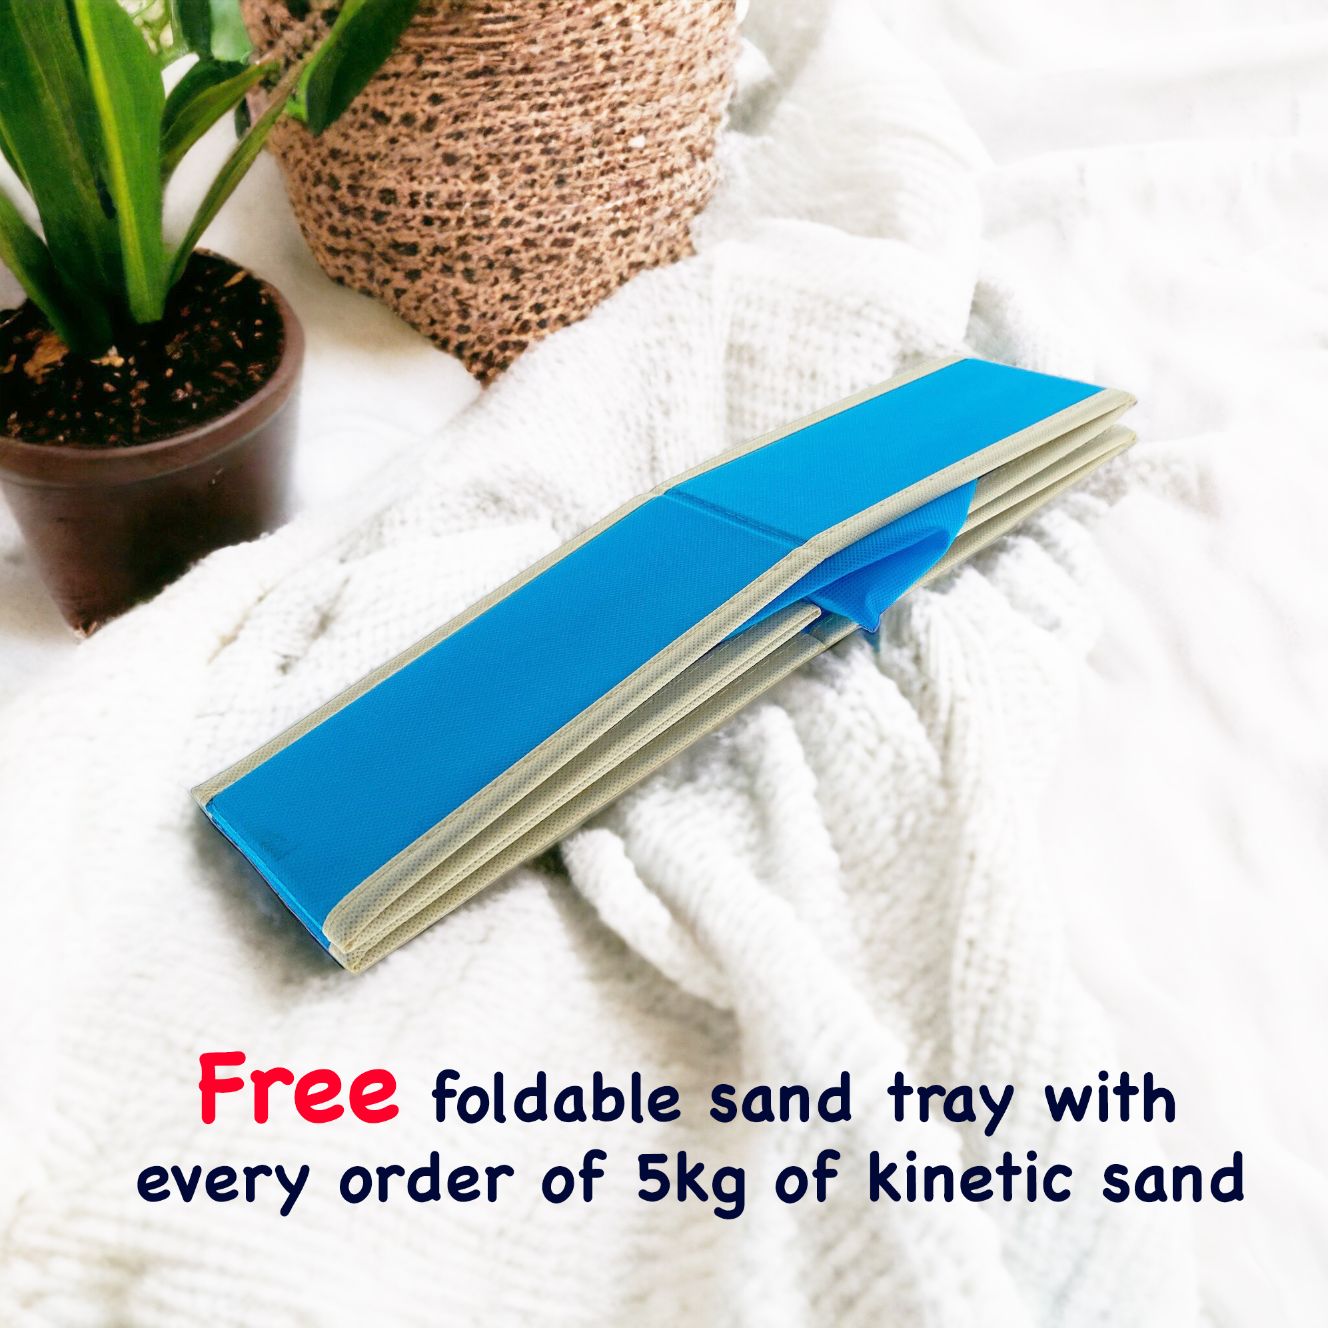 Foldable sand tray